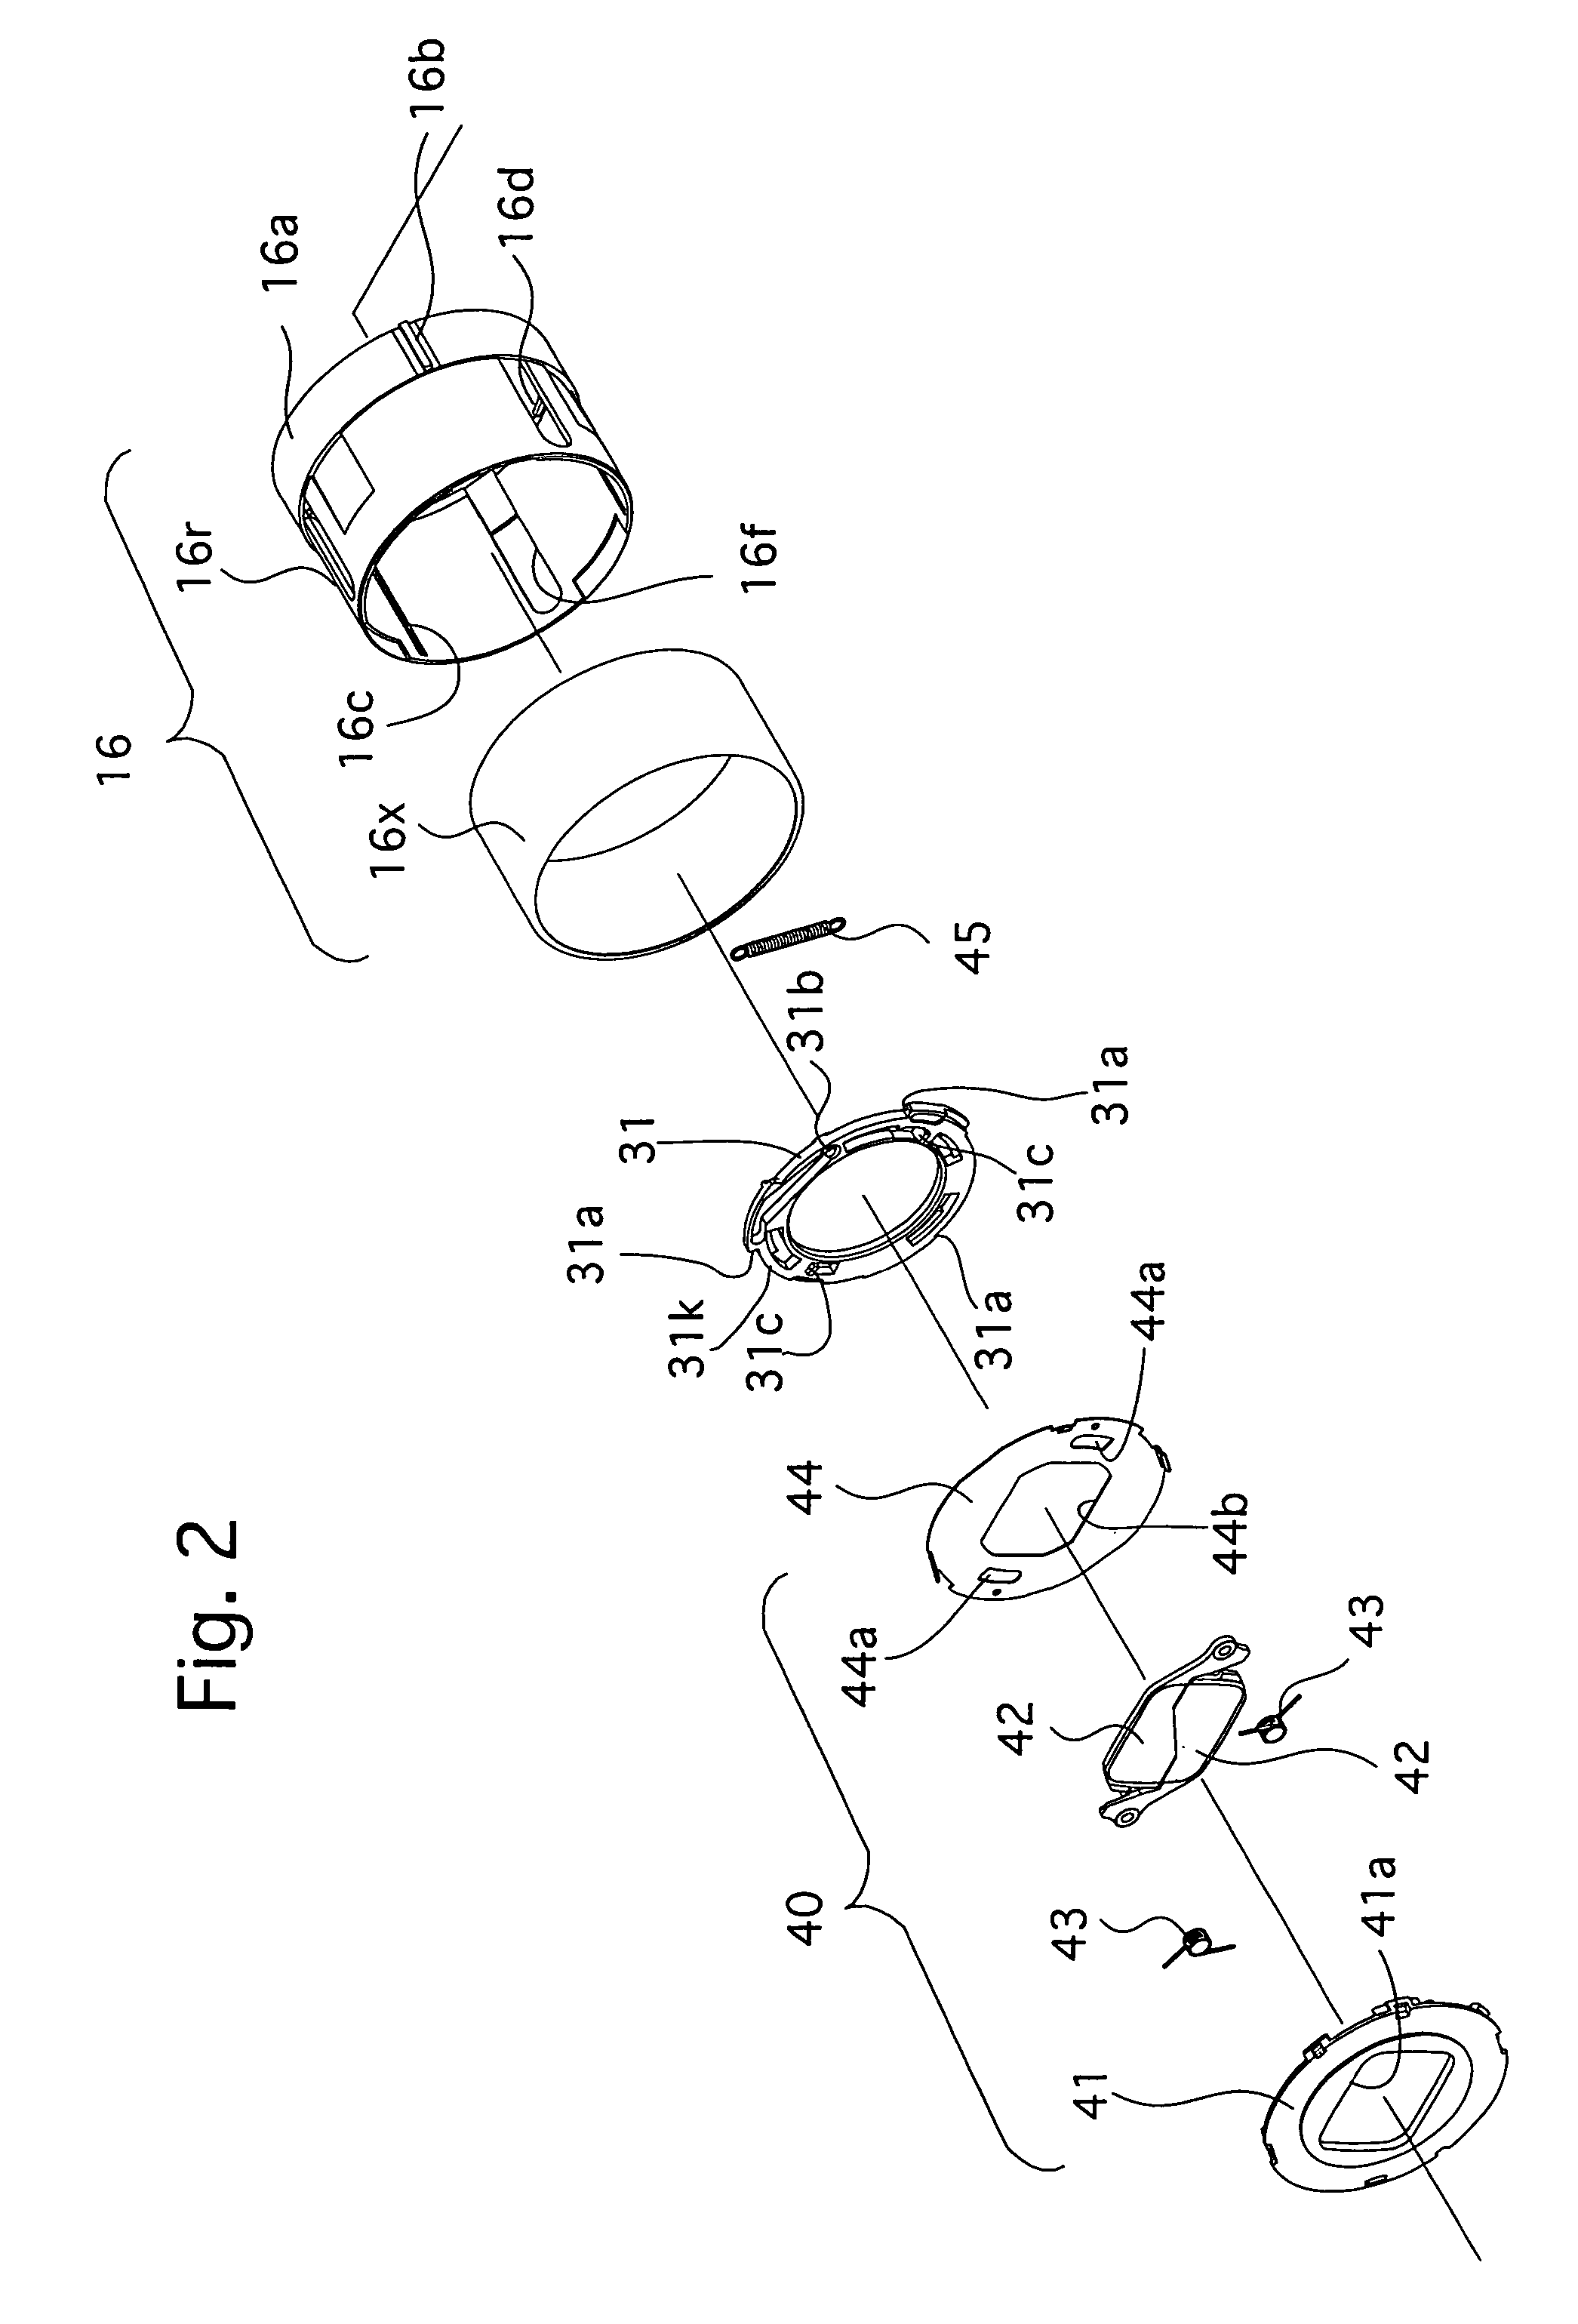 Lens barrel having a lens barrier mechanism